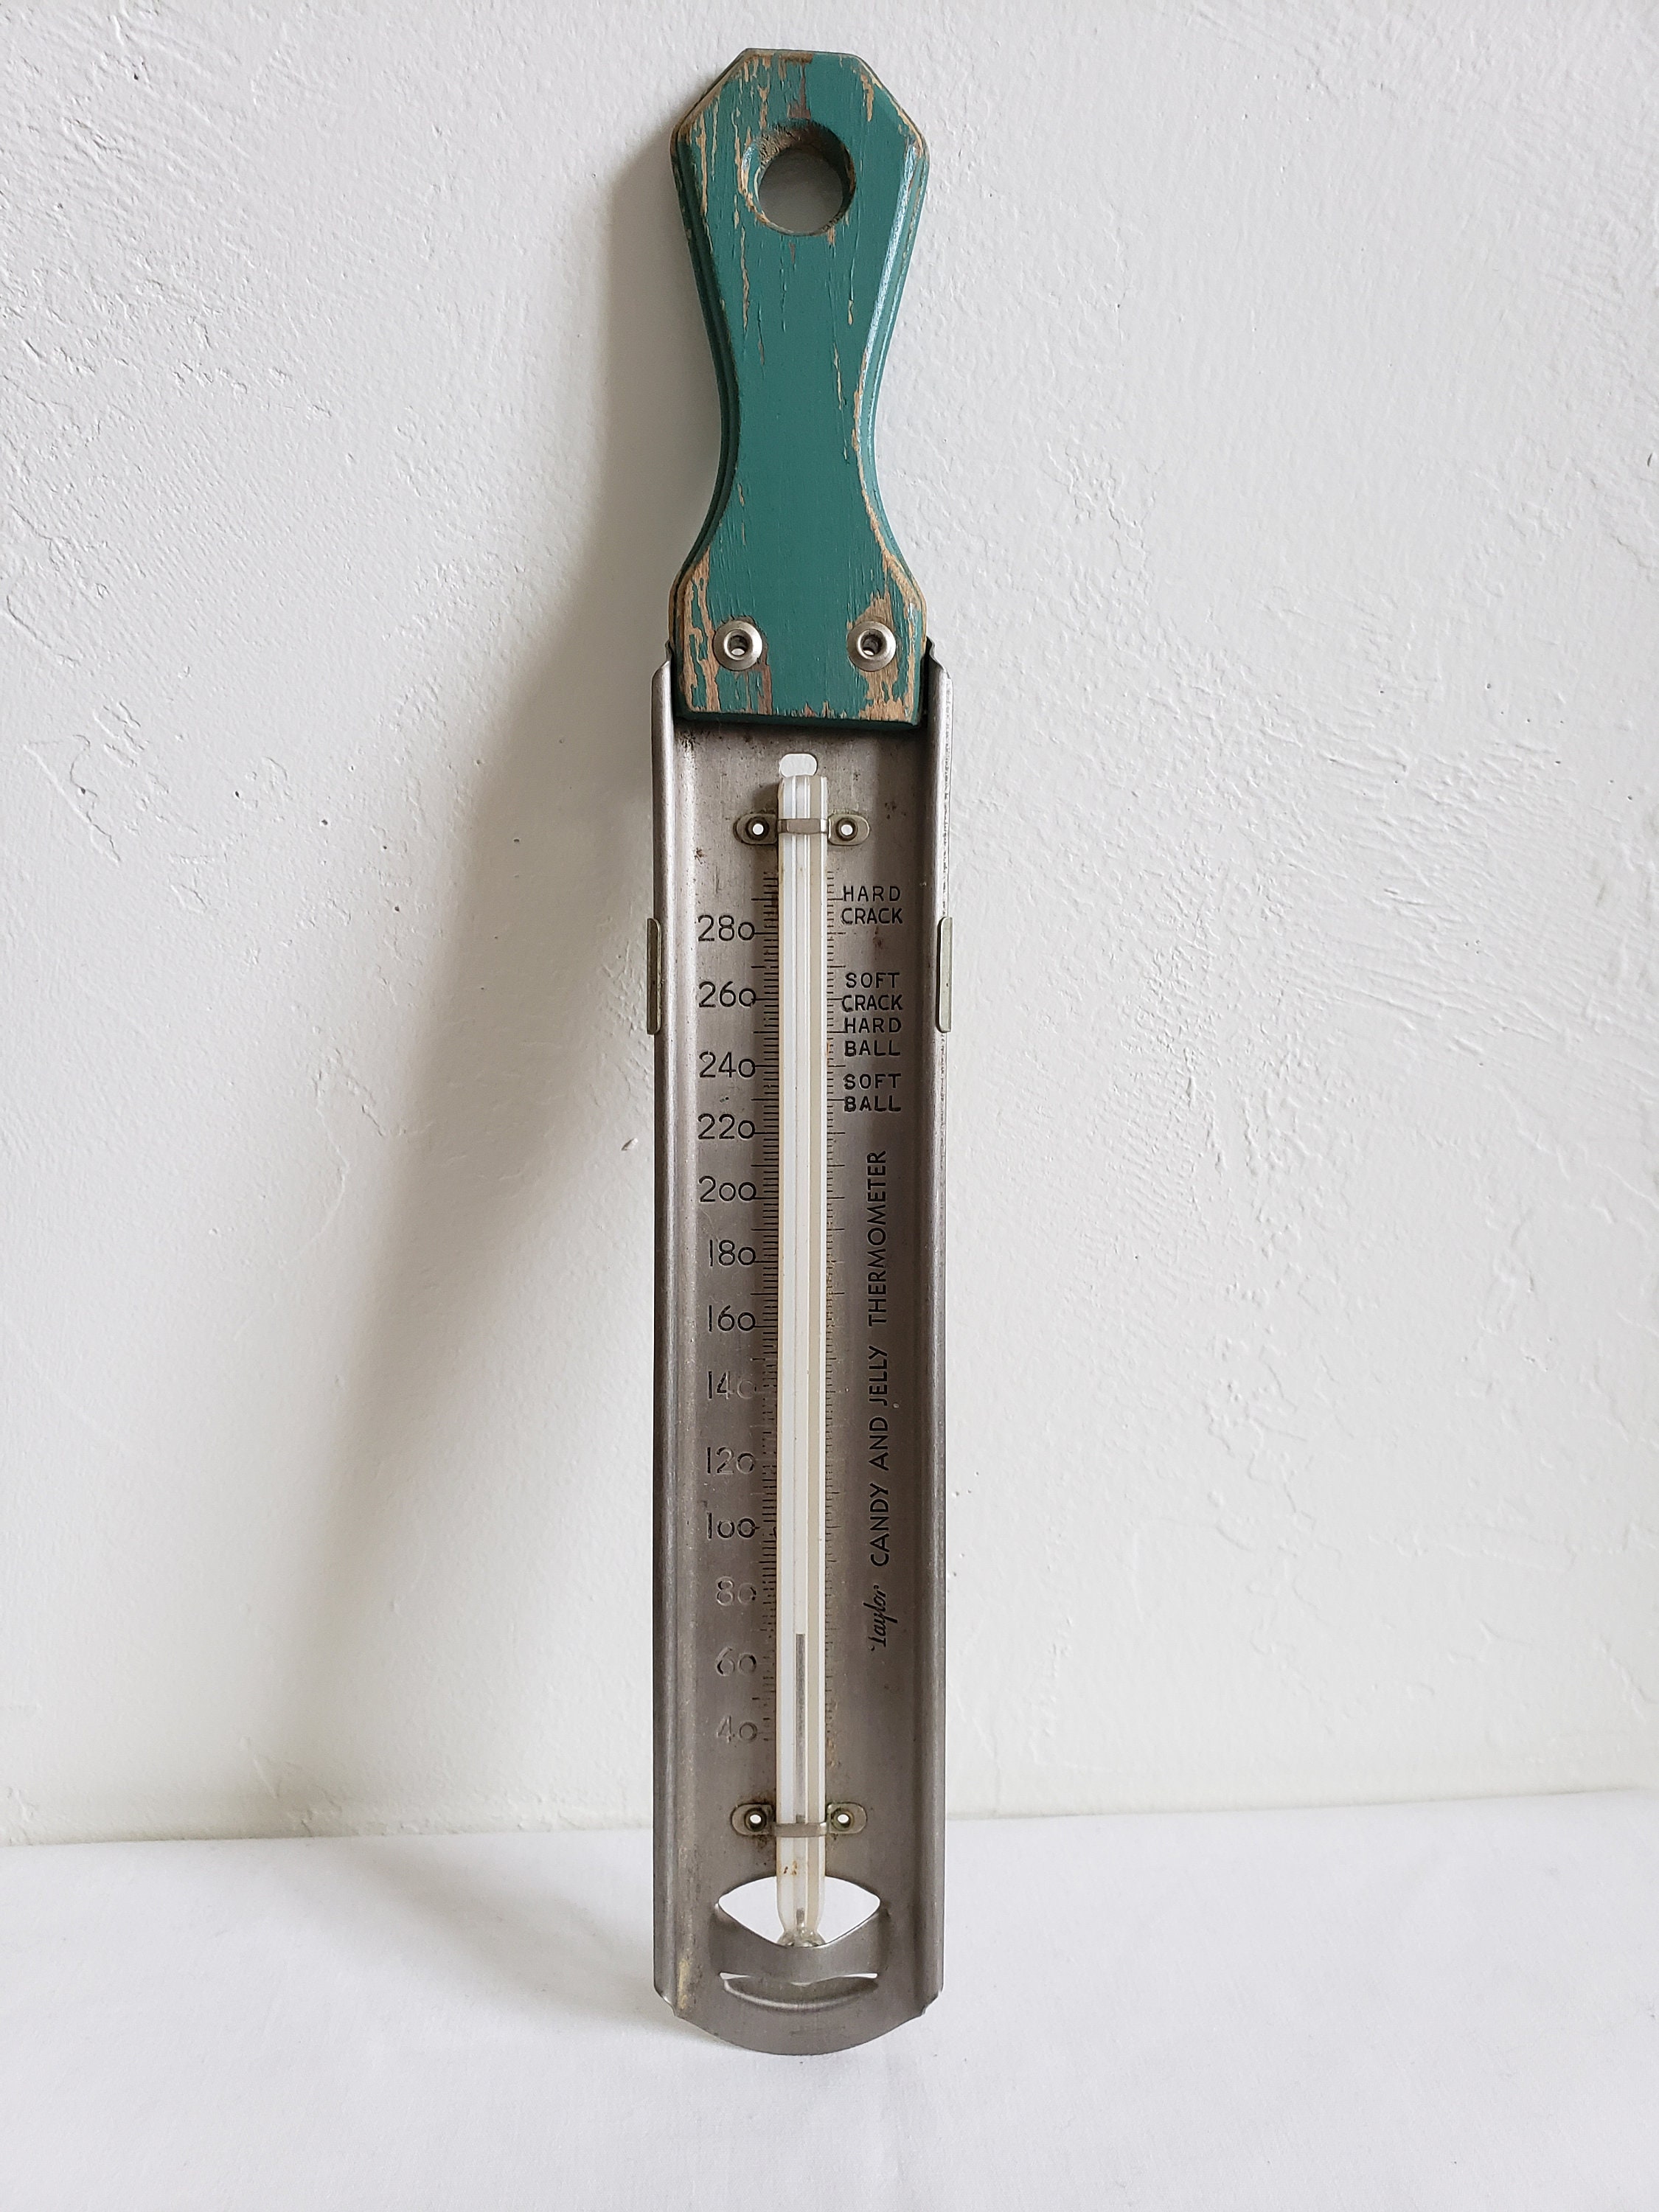 Taylor Refridgerator & Freezer Thermometer Made in USA VTG -  Finland